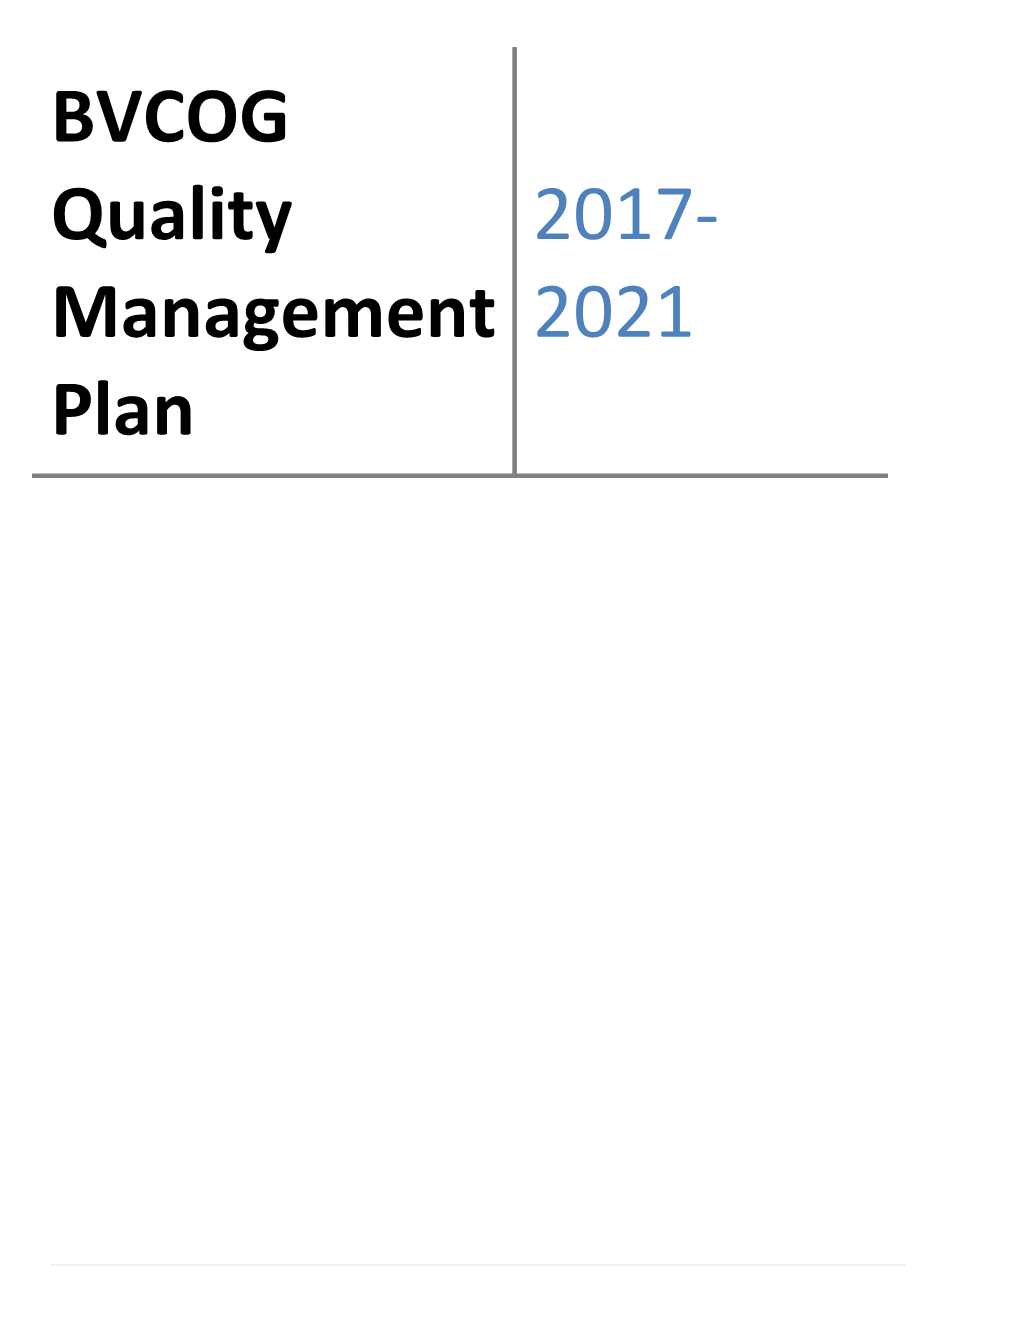 BVCOG Quality Management Plan